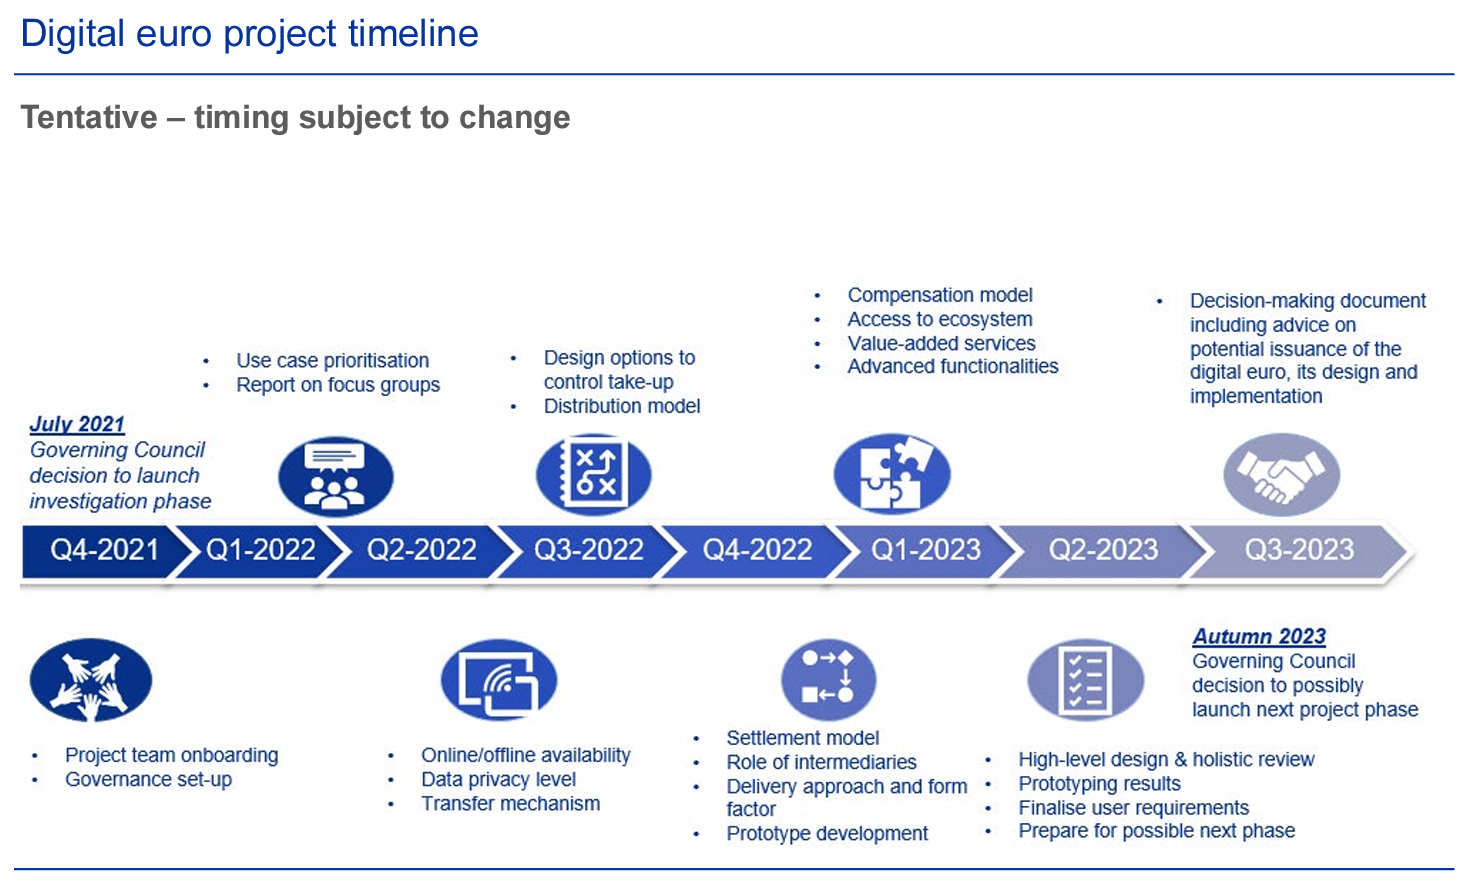 Digital euro project tentative timeline, Source: European Central Bank, April 2023